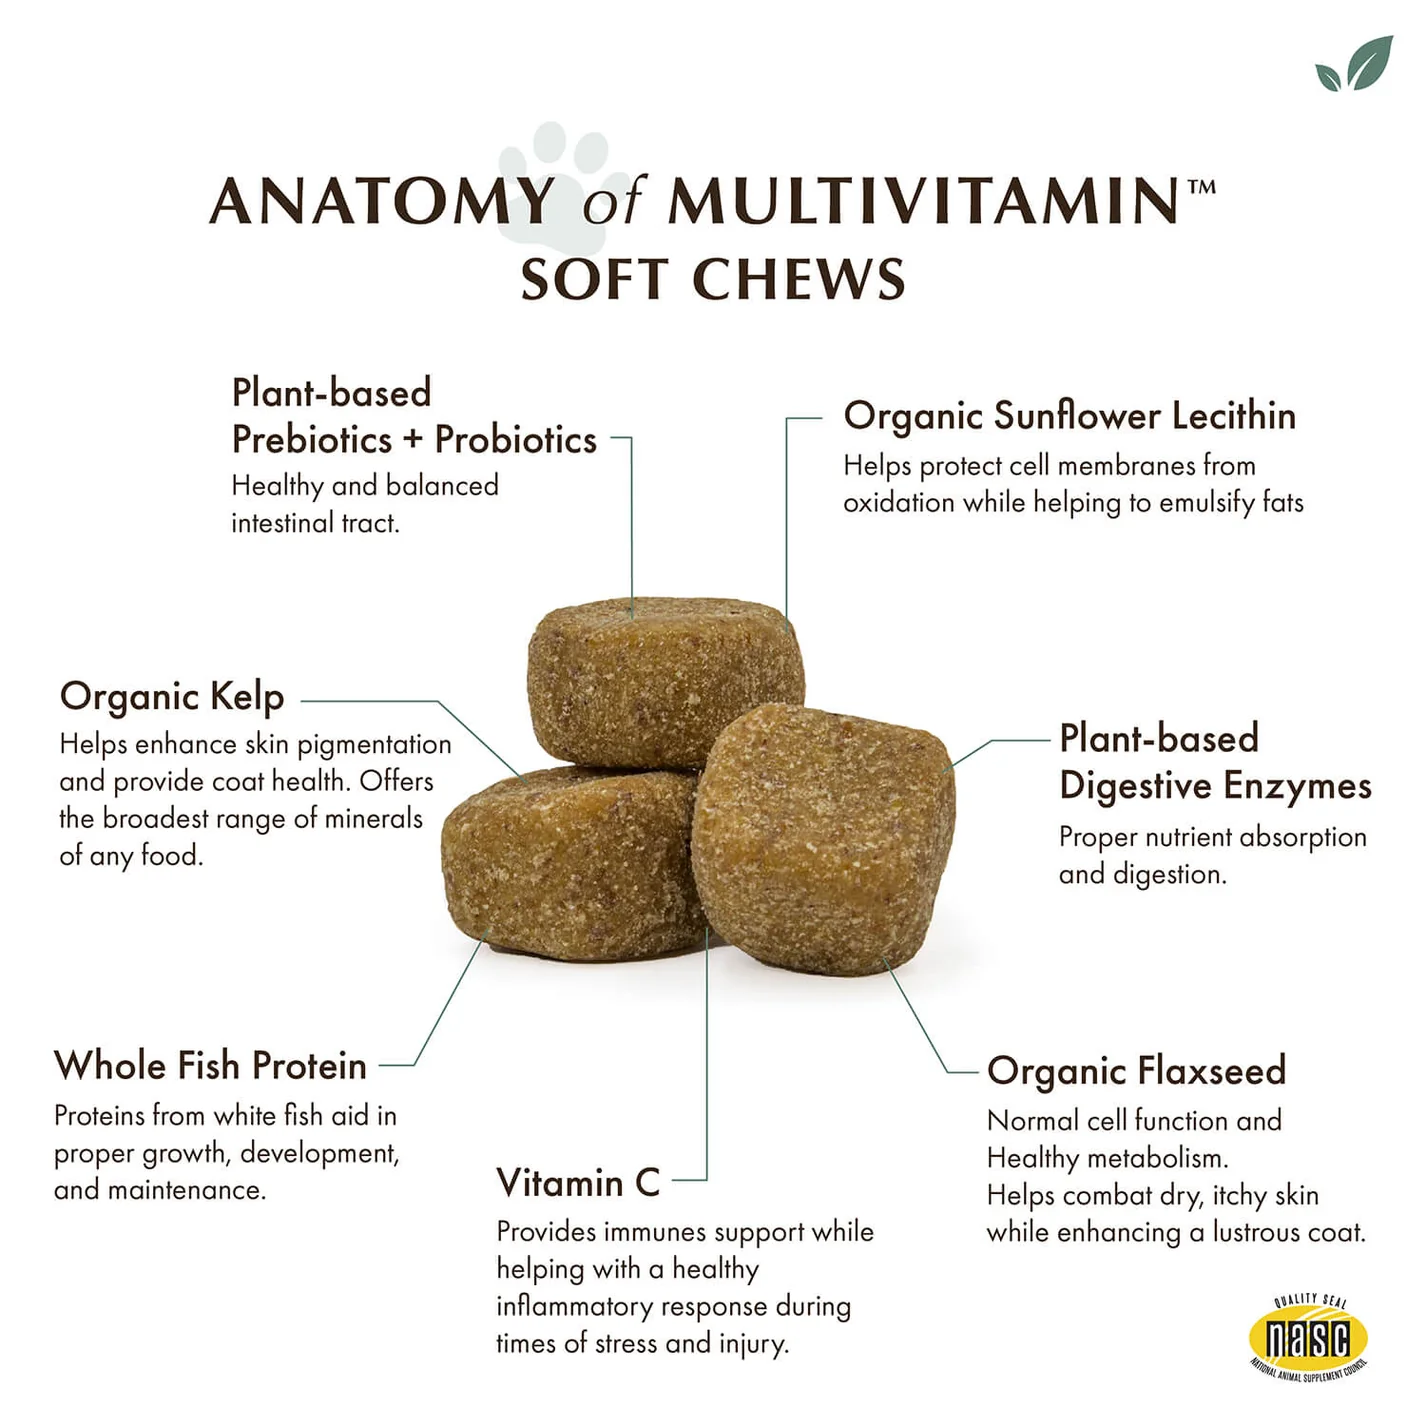 Wholistic Pet Organics Daily Multivitamin Soft Chews